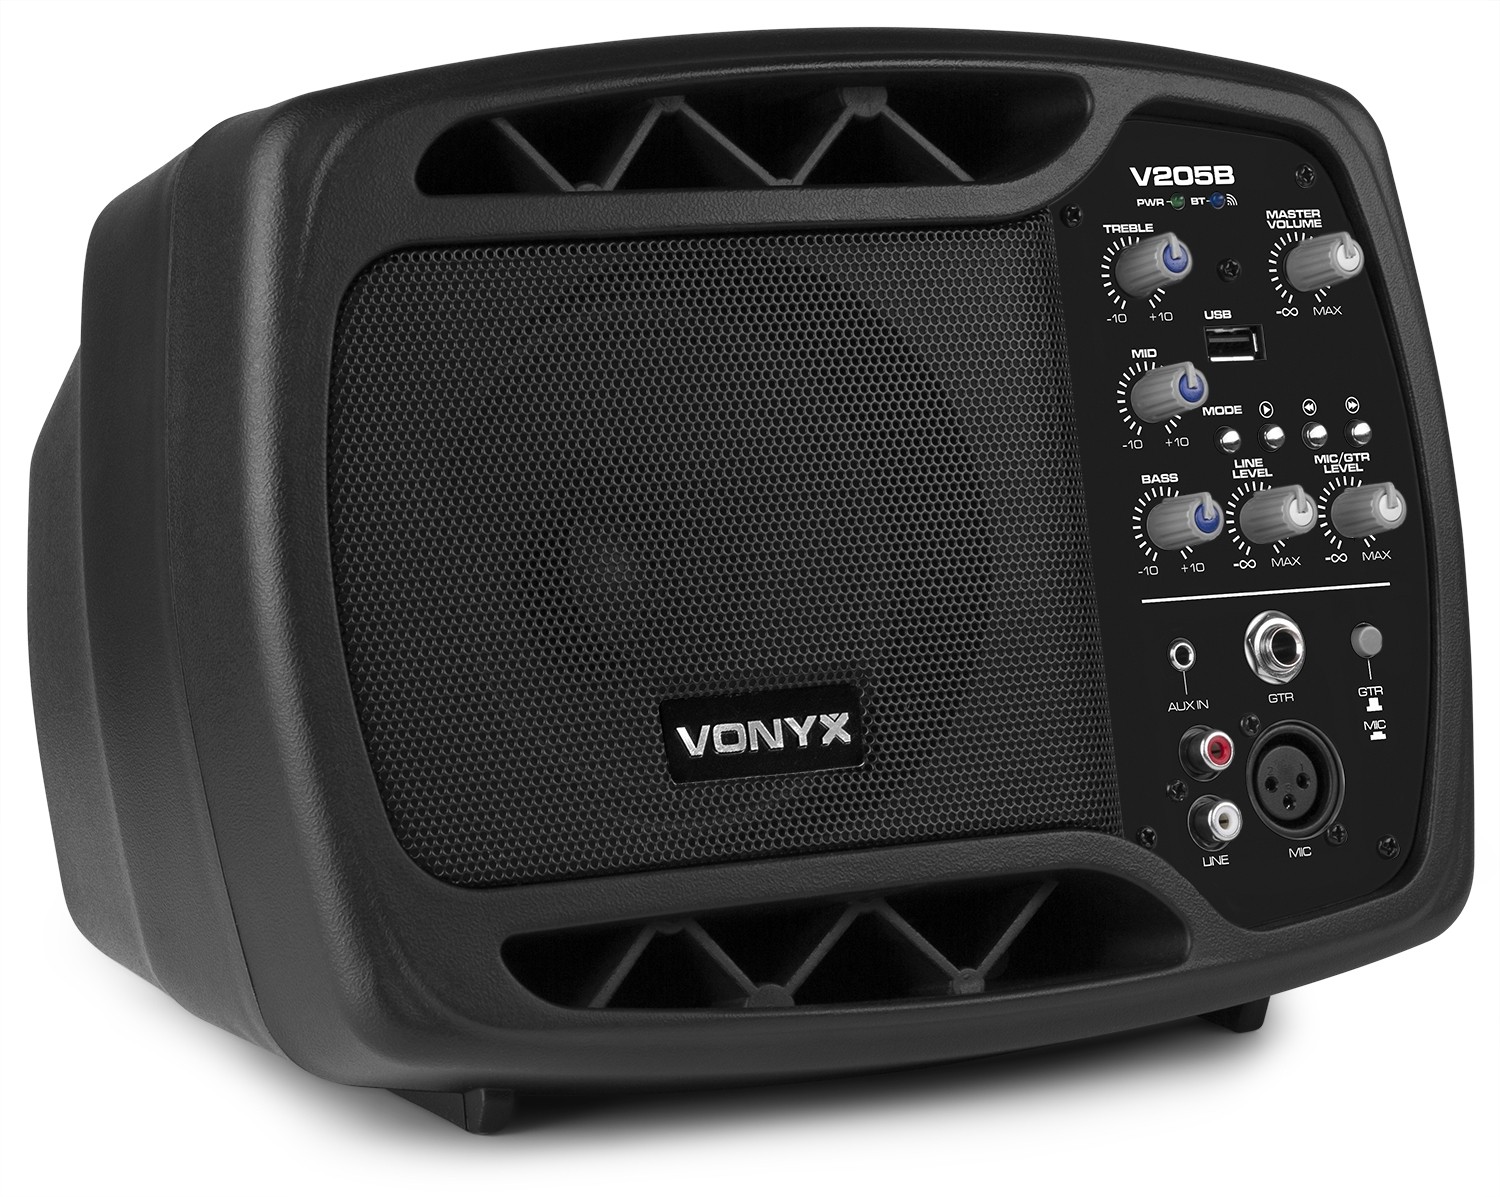 VX 170295 Vonyx V205B Monitor personal con bluetooth y USB